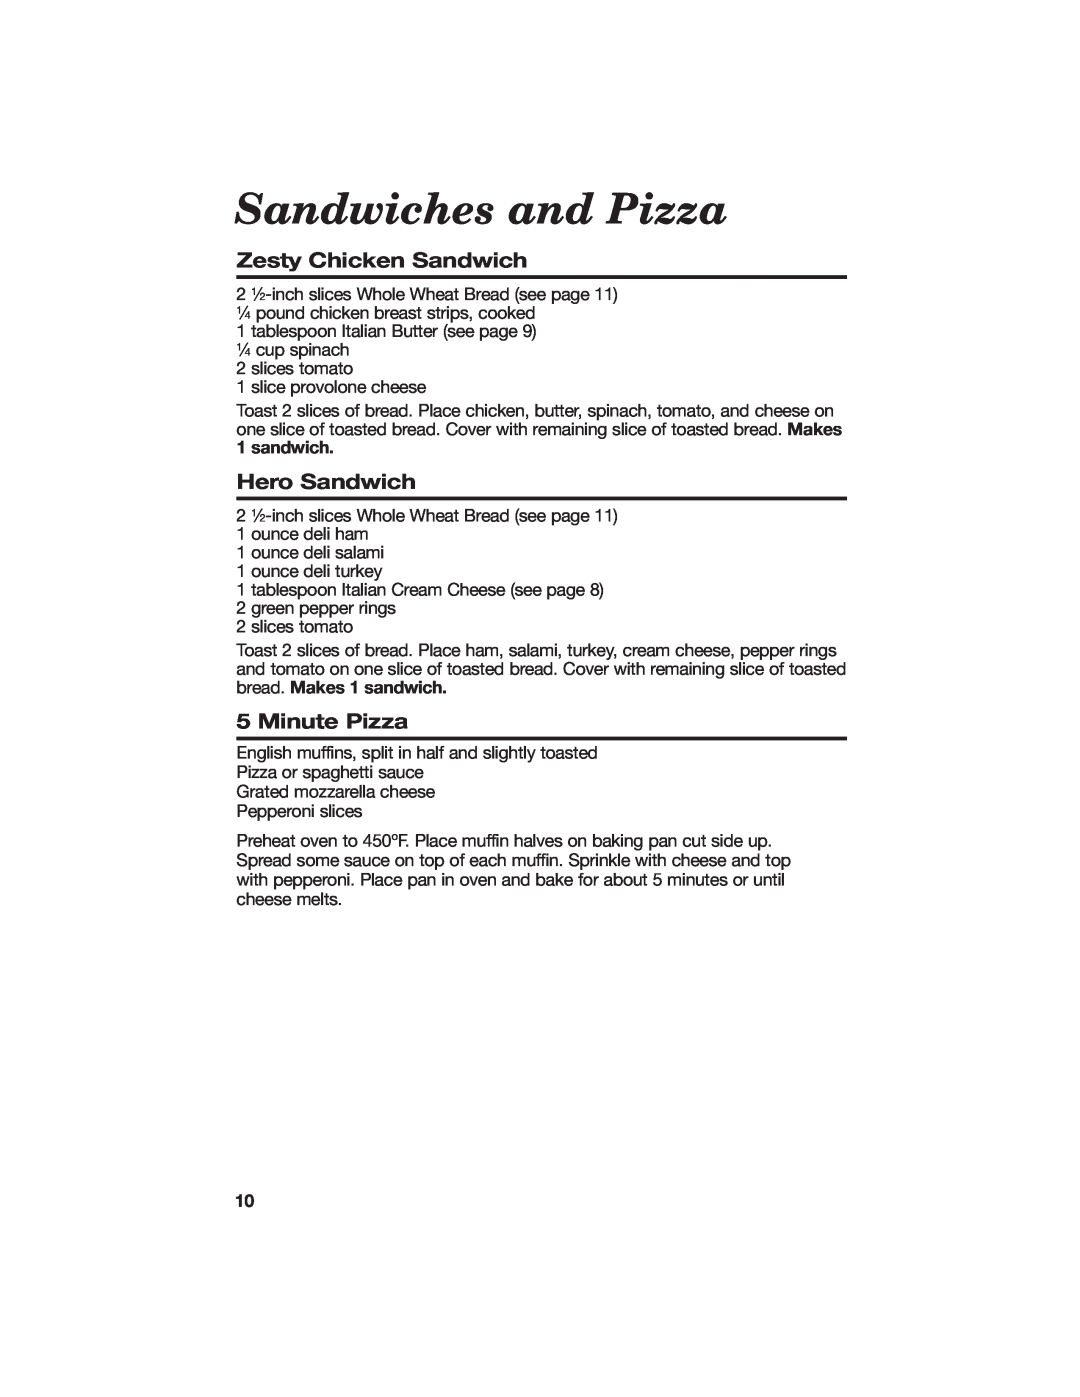 Hamilton Beach All-Metal Toaster manual Sandwiches and Pizza, Zesty Chicken Sandwich, Hero Sandwich, Minute Pizza 